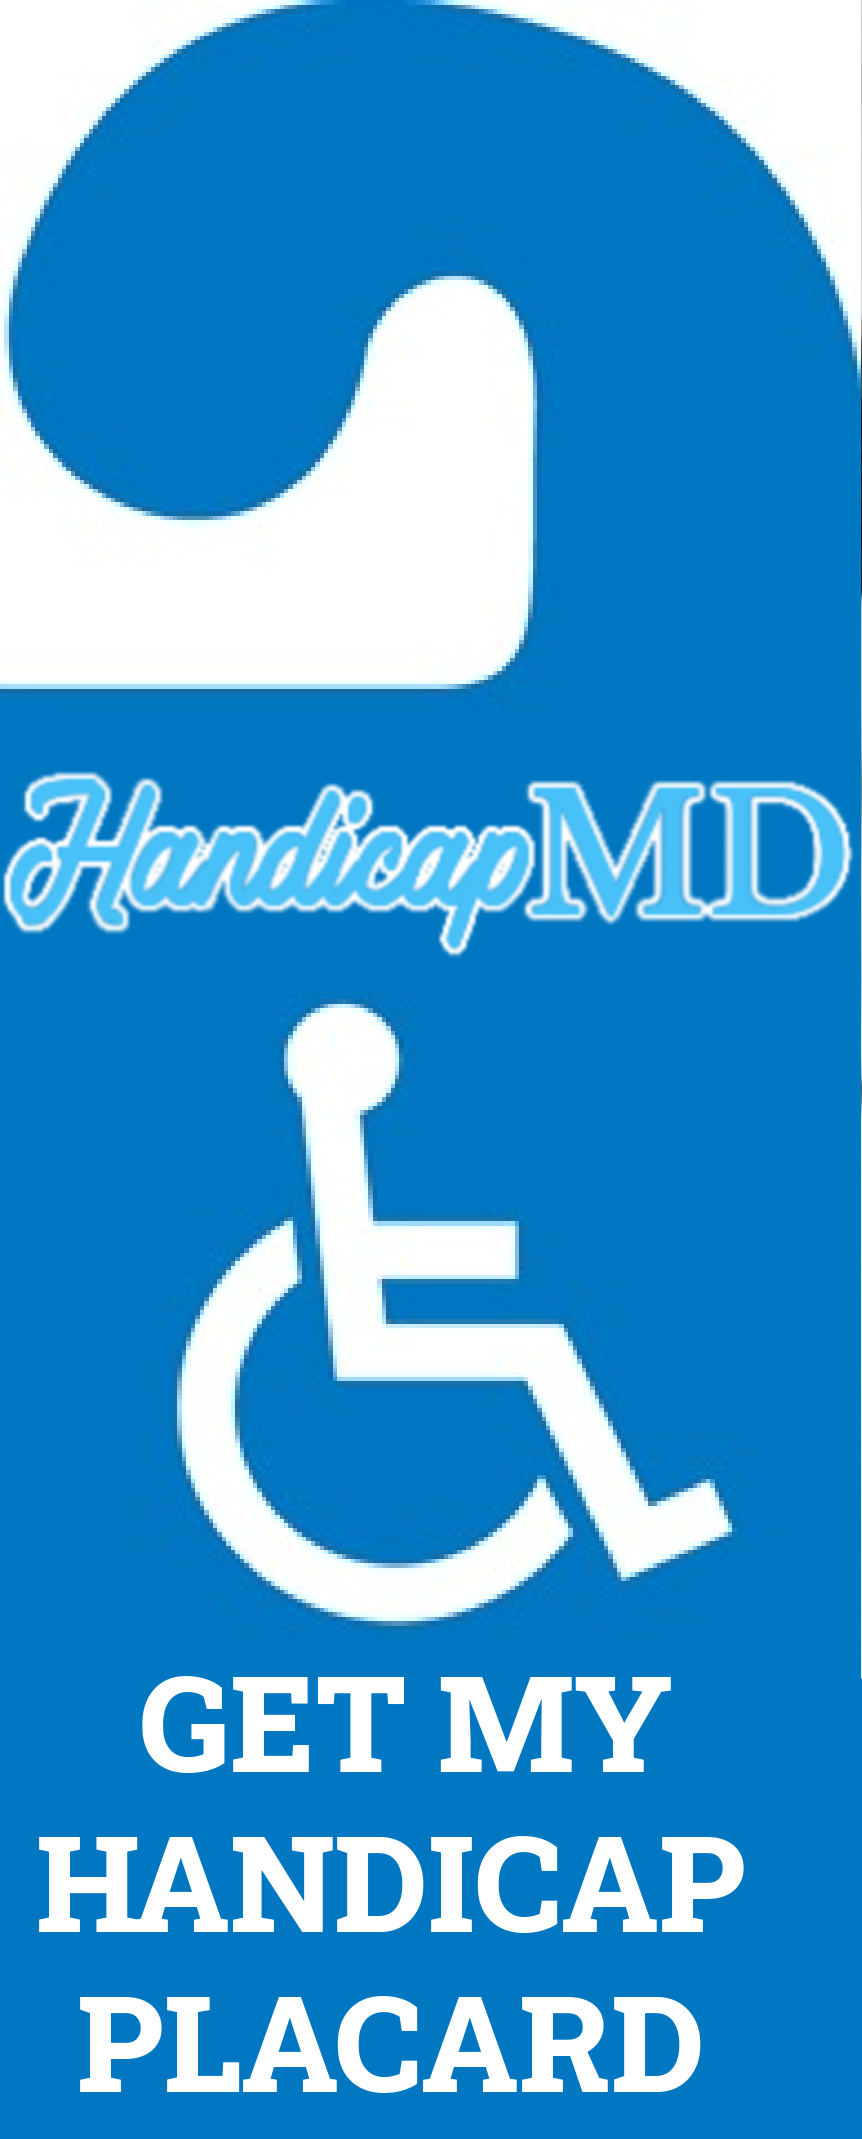 Online Guide to Handicap Parking in Washington